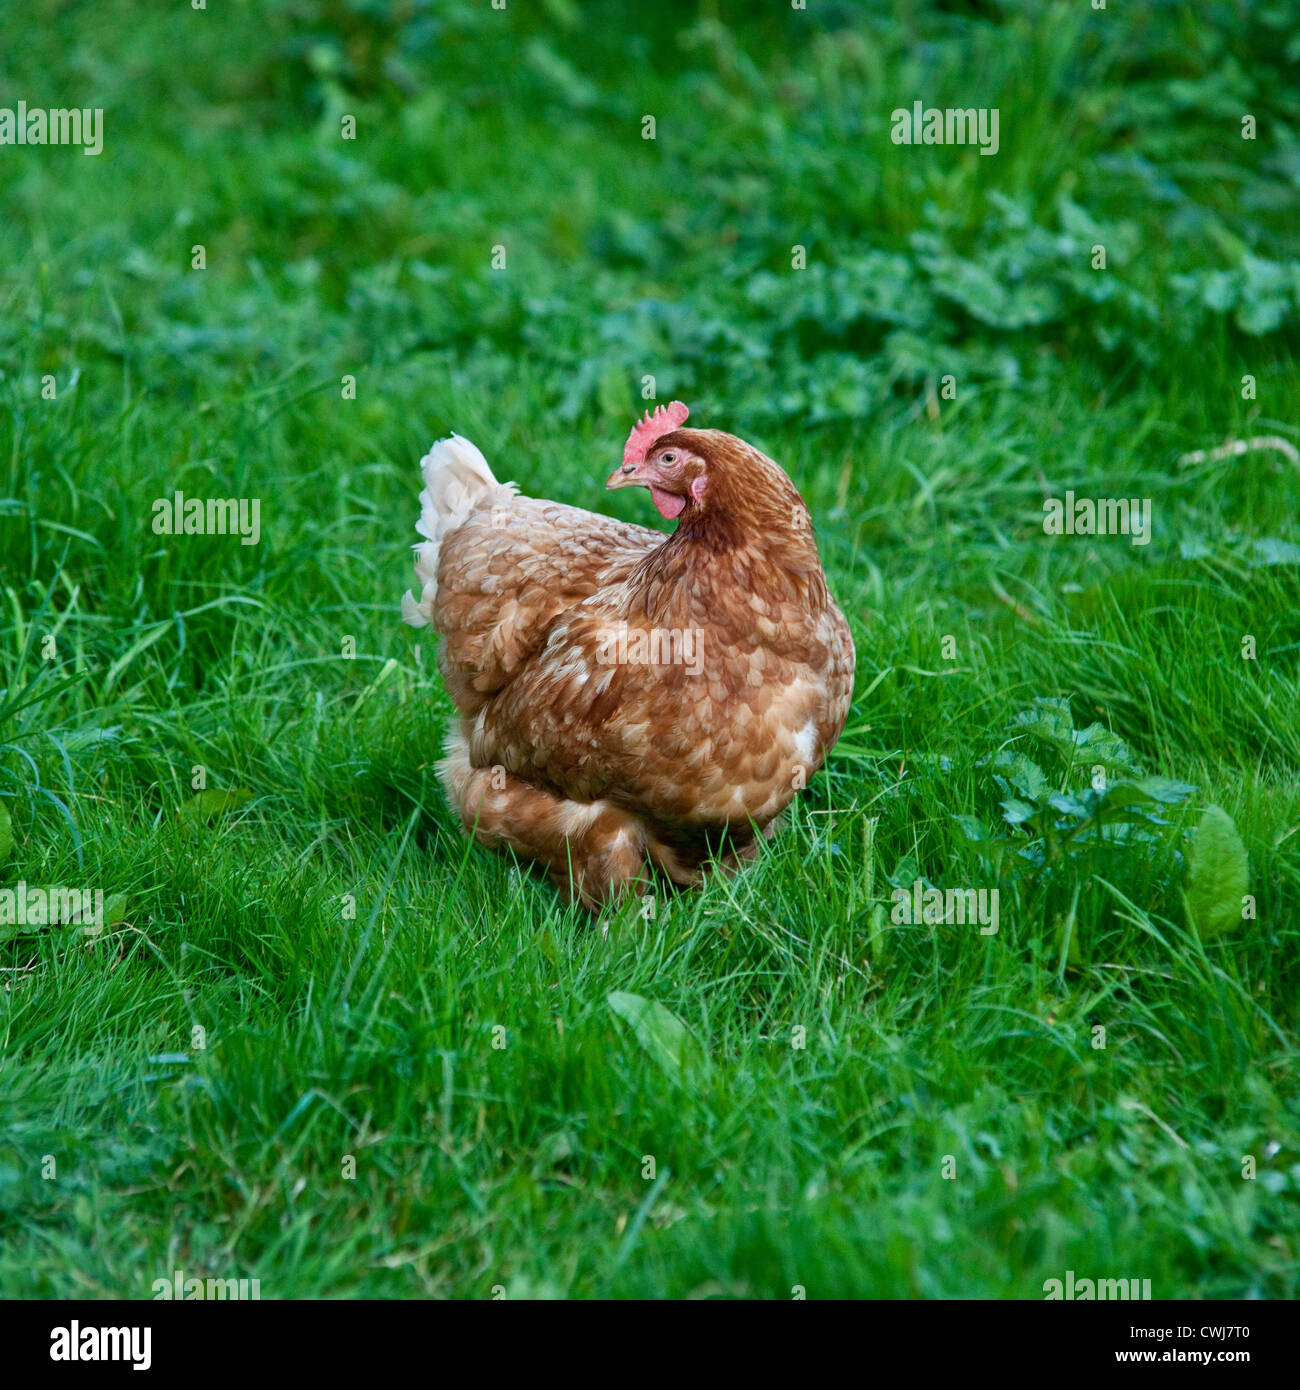 Buff orpington cross breed chicken, Cornwall, England, United Kingdom. Stock Photo